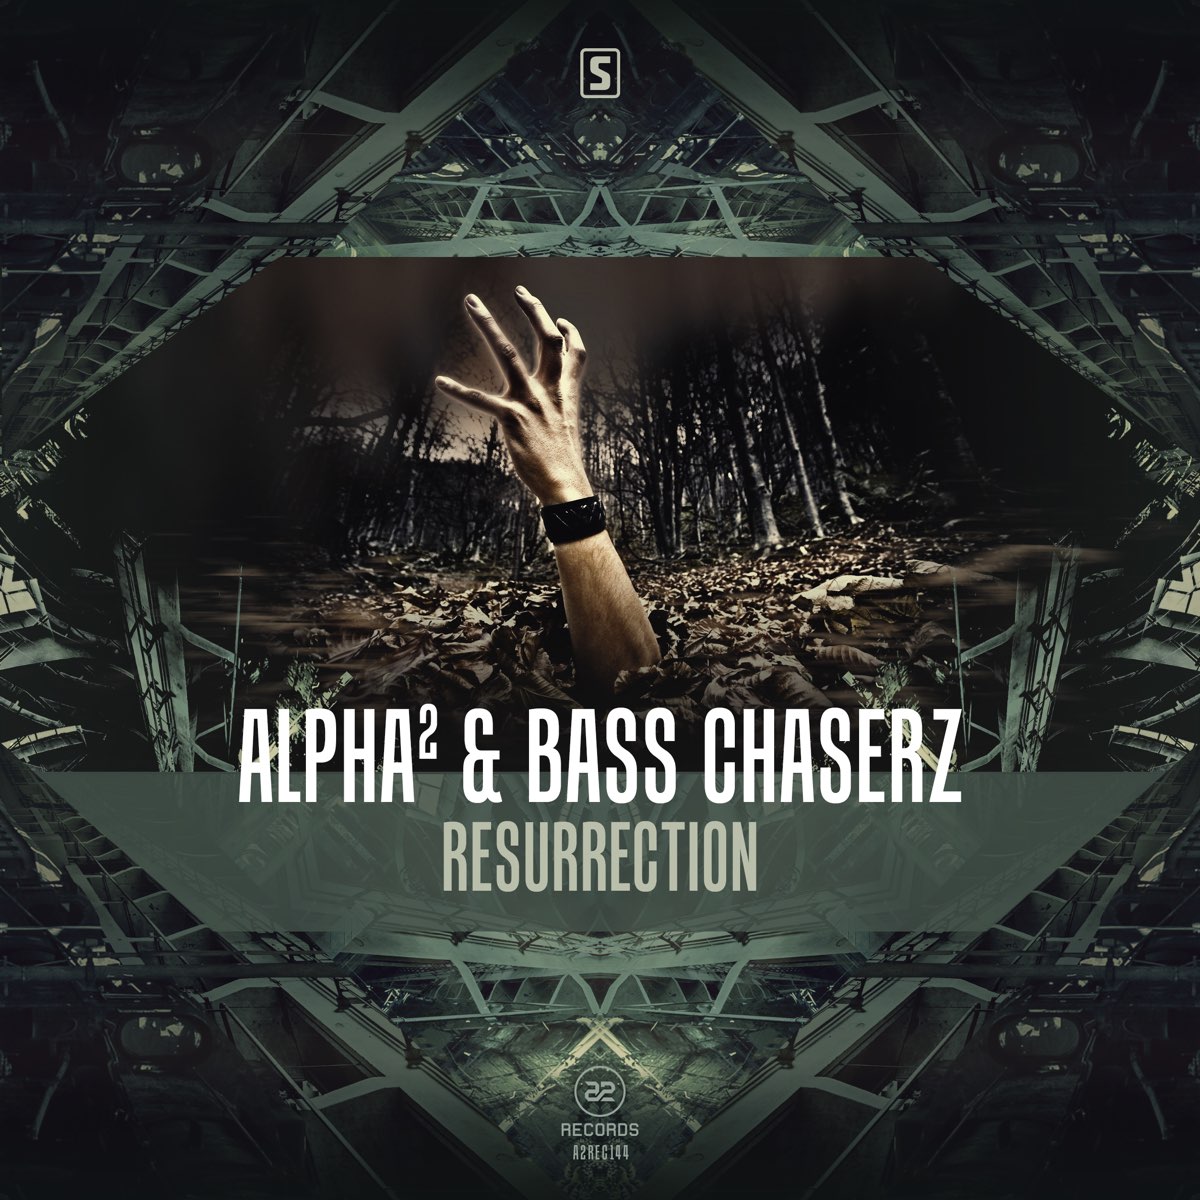 Alpha Twins Hardstyle. Album Art download Resurrection. Resurrection by Fazzini. Gang Resurrection Trap Remix.